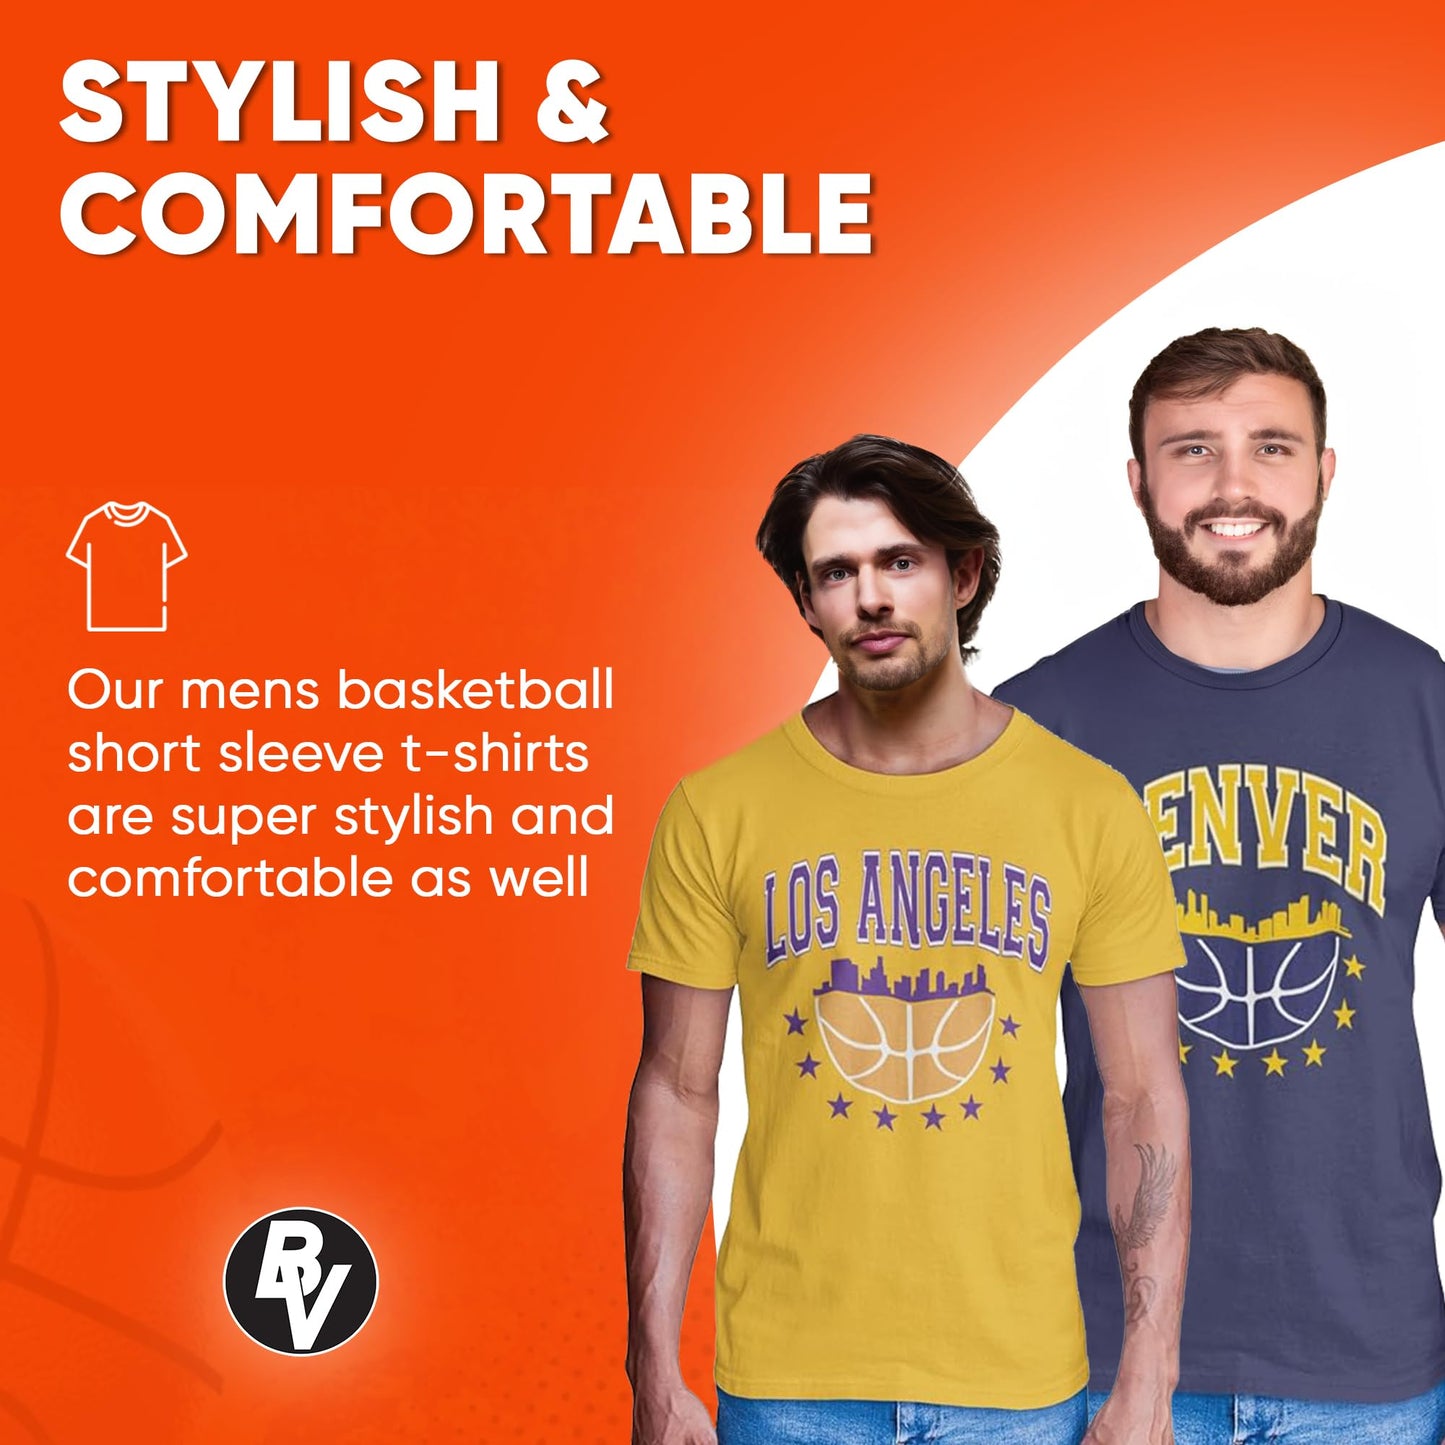 BROOKLYN VERTICAL Basketball Sports Fan Short Sleeve T-Shirt | Brooklyn, Denver, Boston, Golden State, Chicago